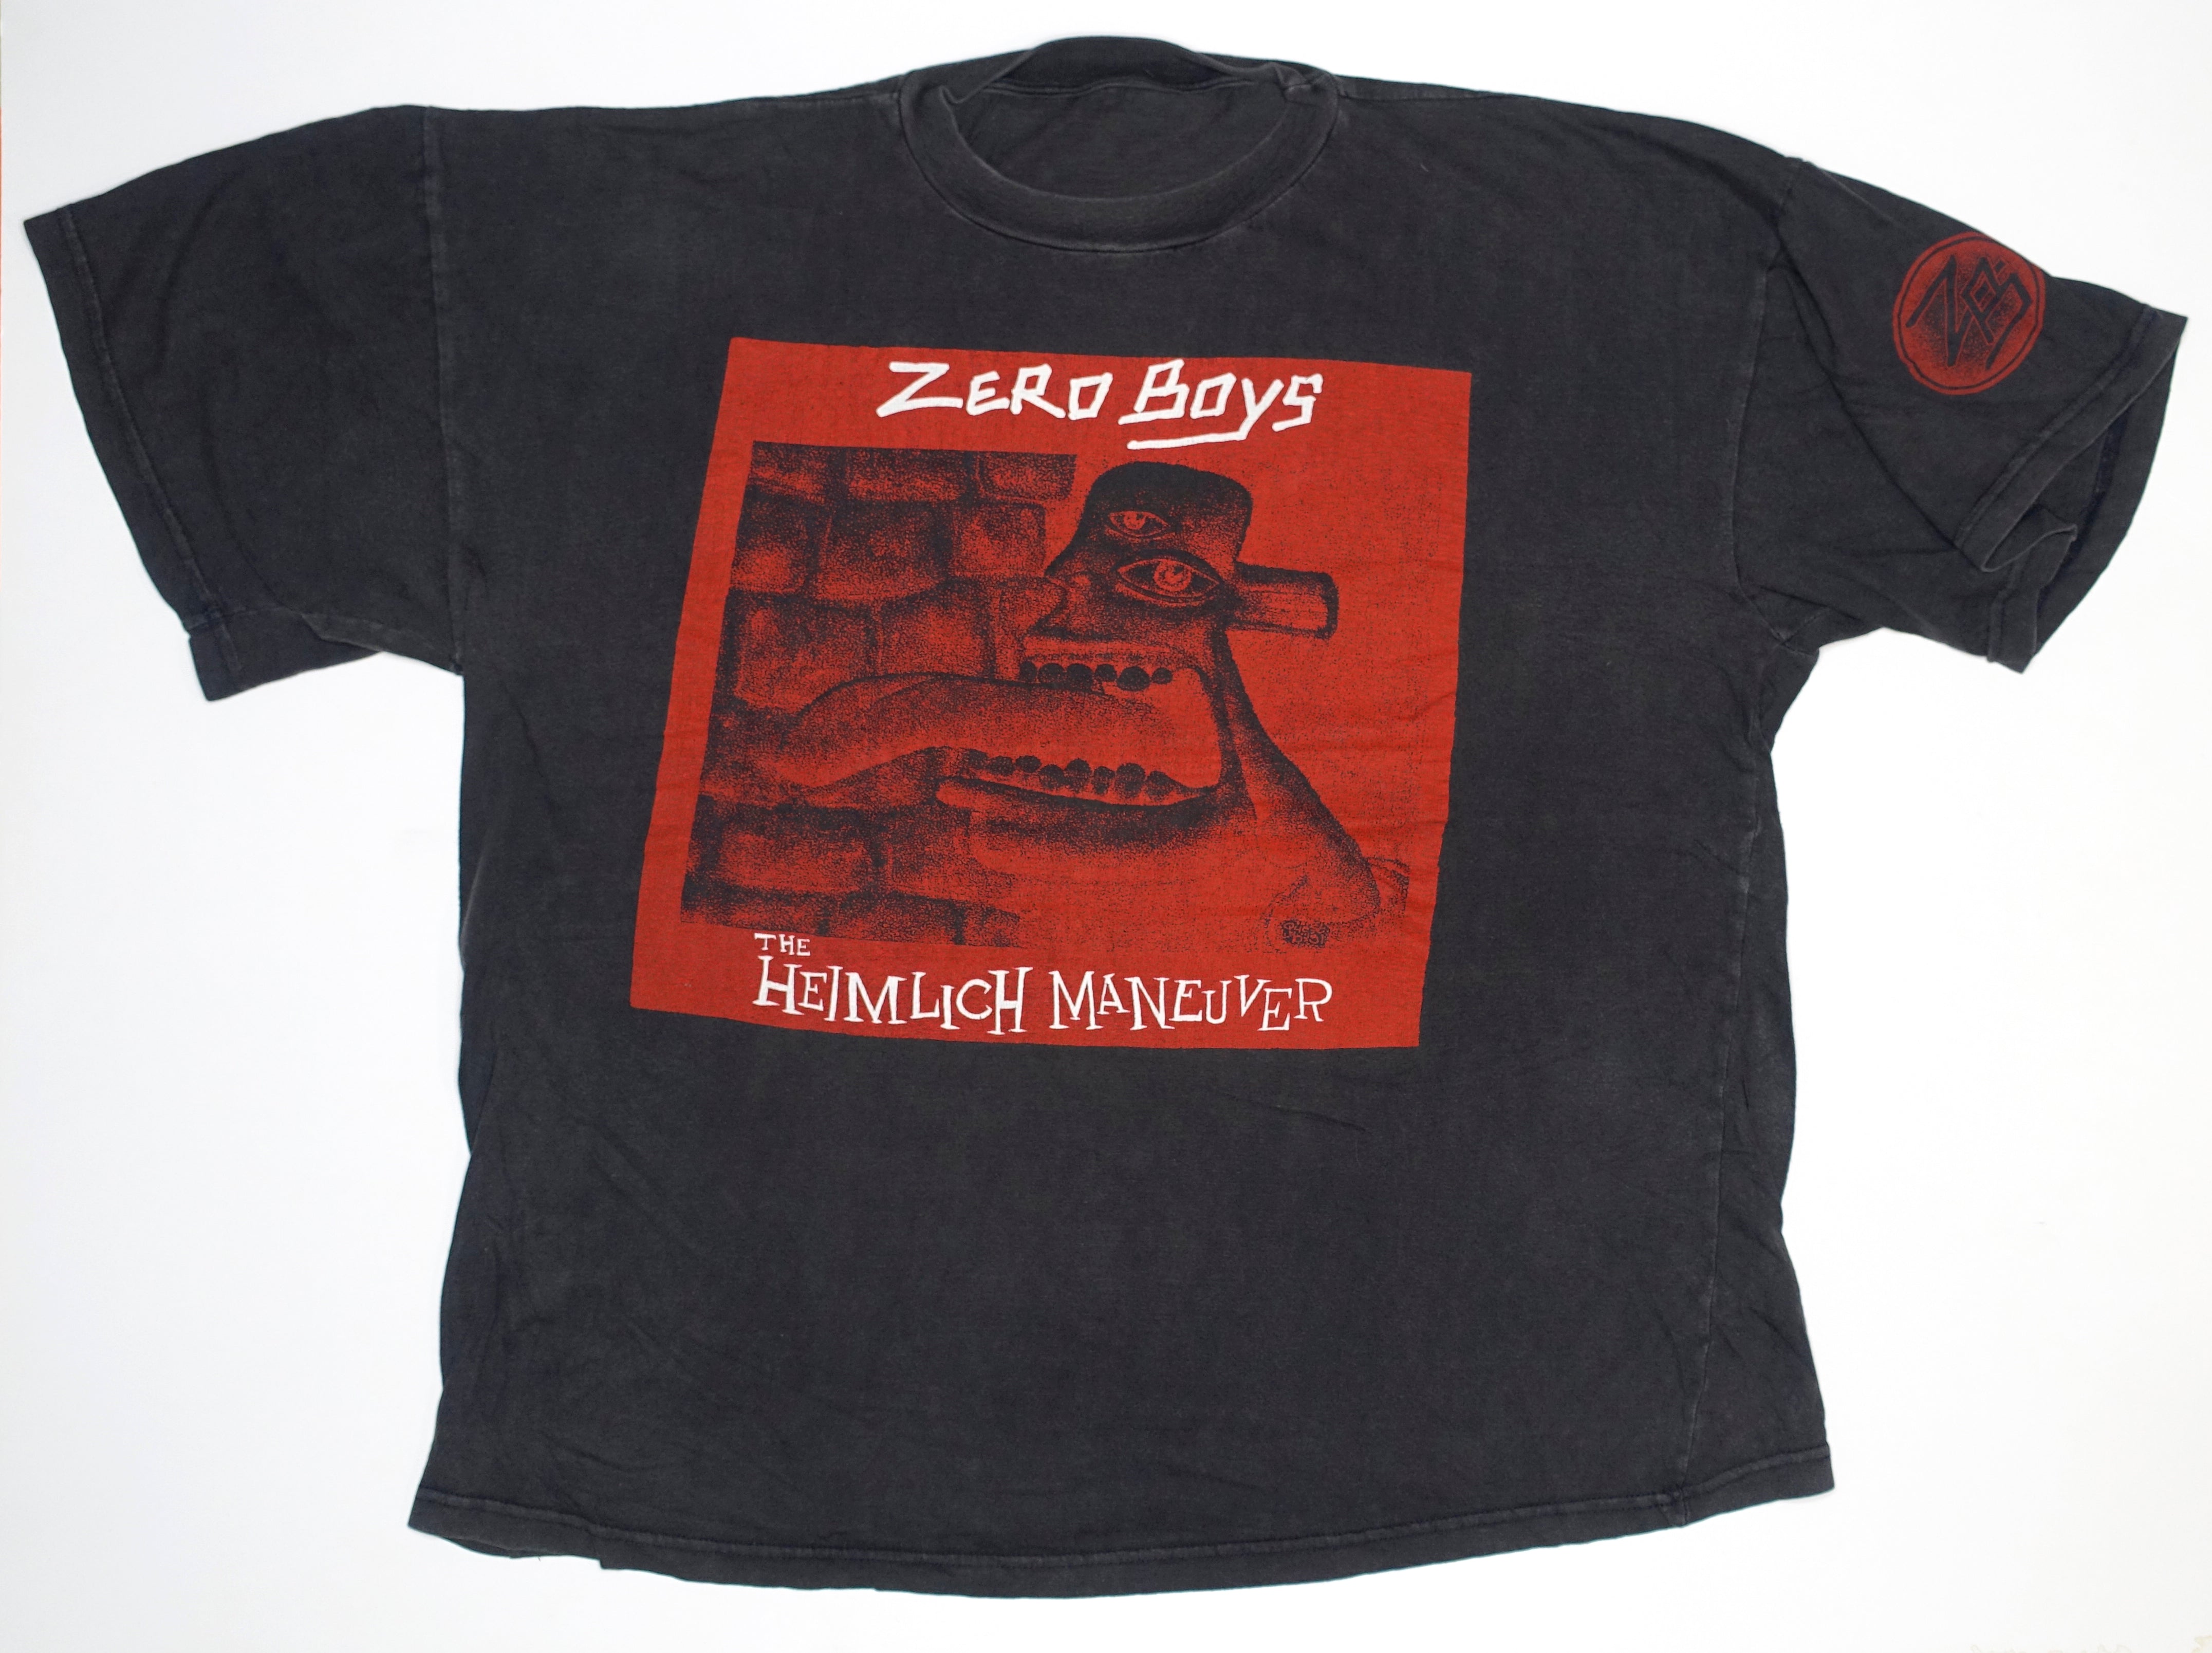 Zero Boys – The Heimlich Maneuver 1993 Tour Shirt Size XL